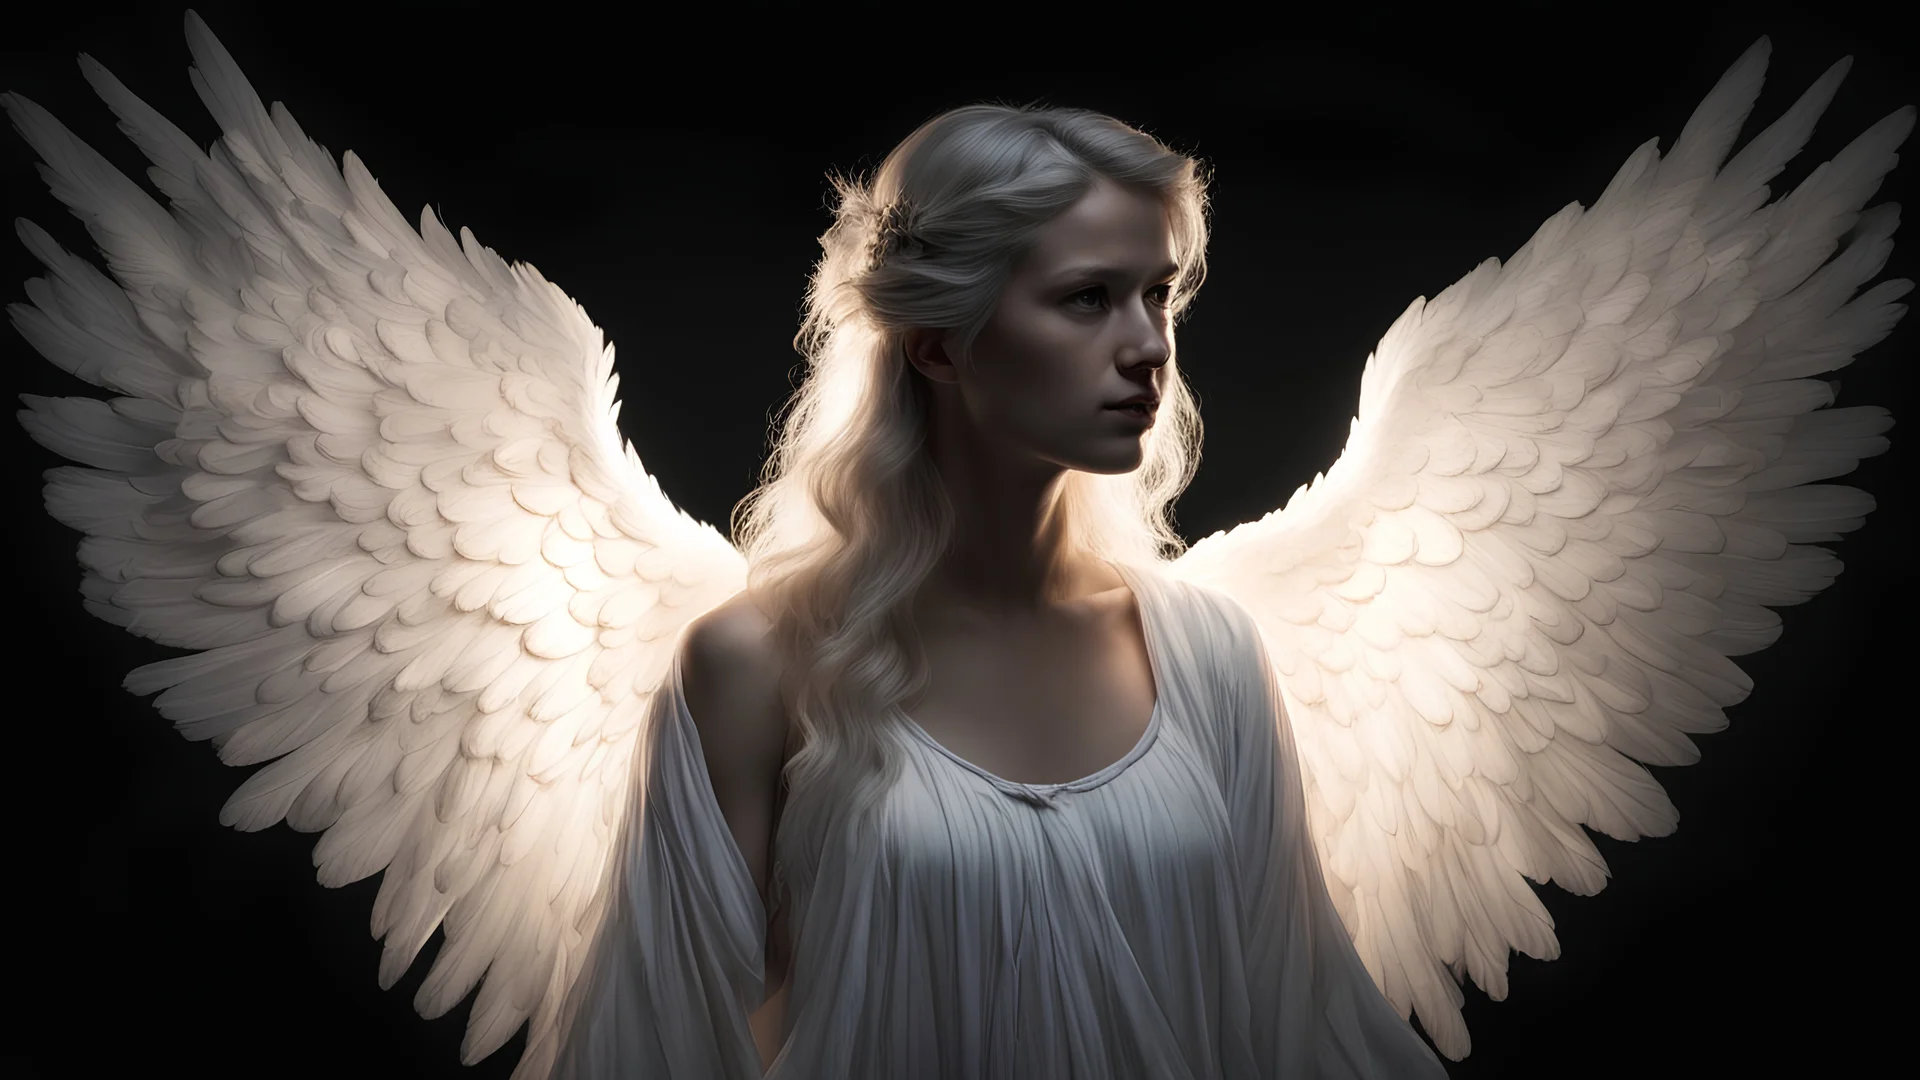 Female angel, black background, low lighting